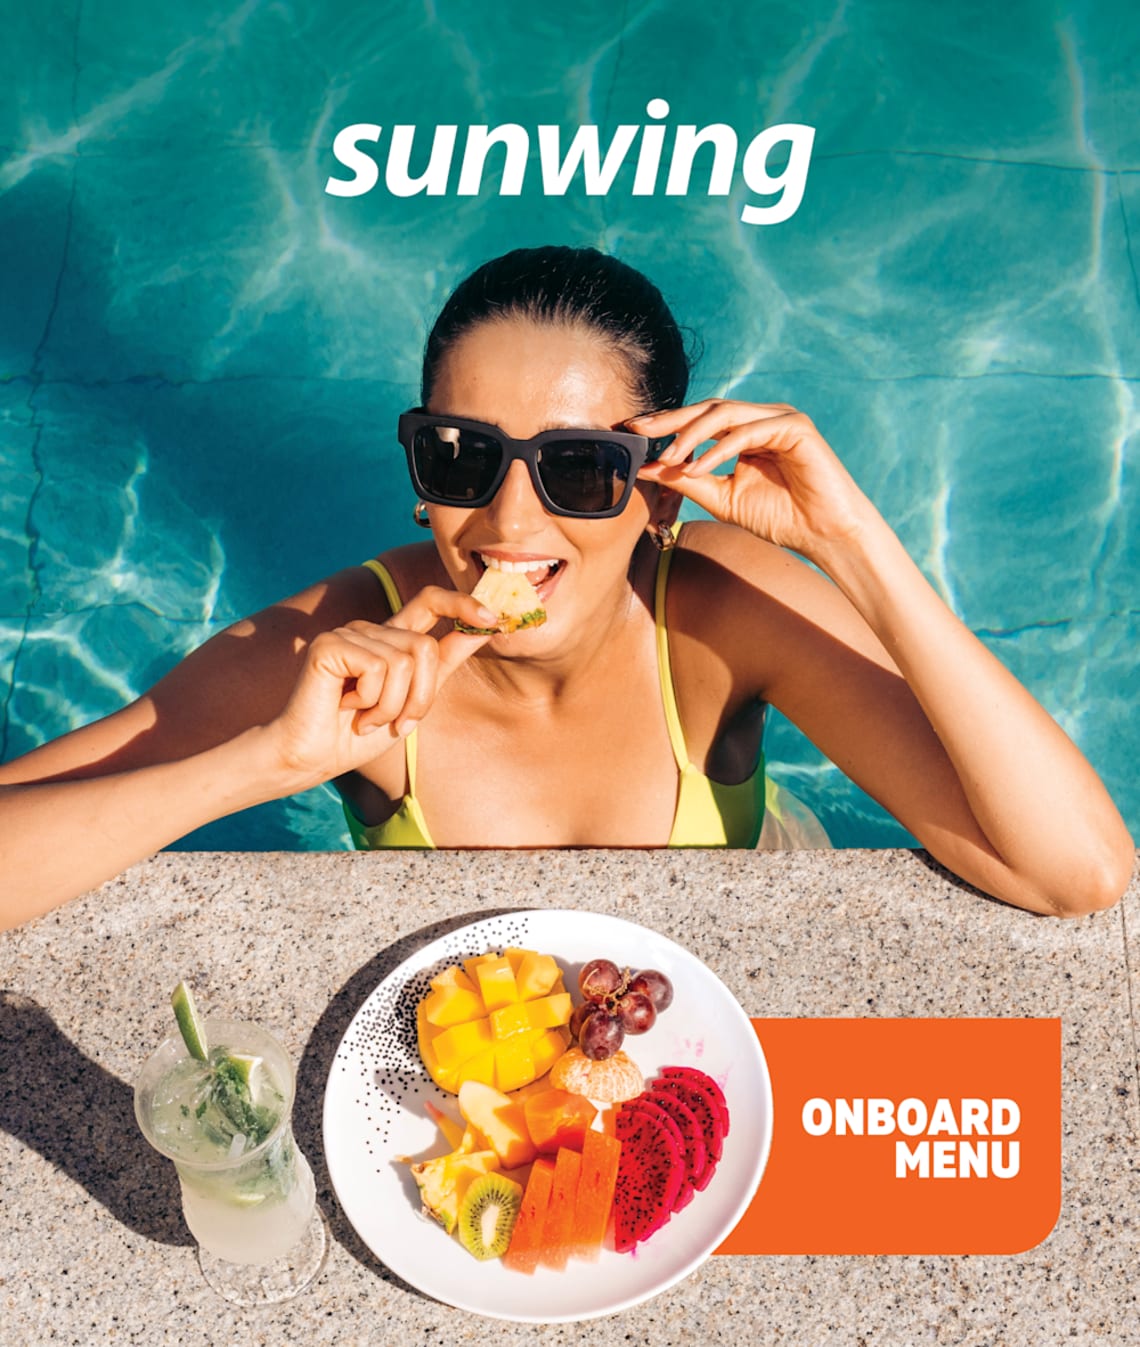 Sunwing Airlines : Sunwing Café image